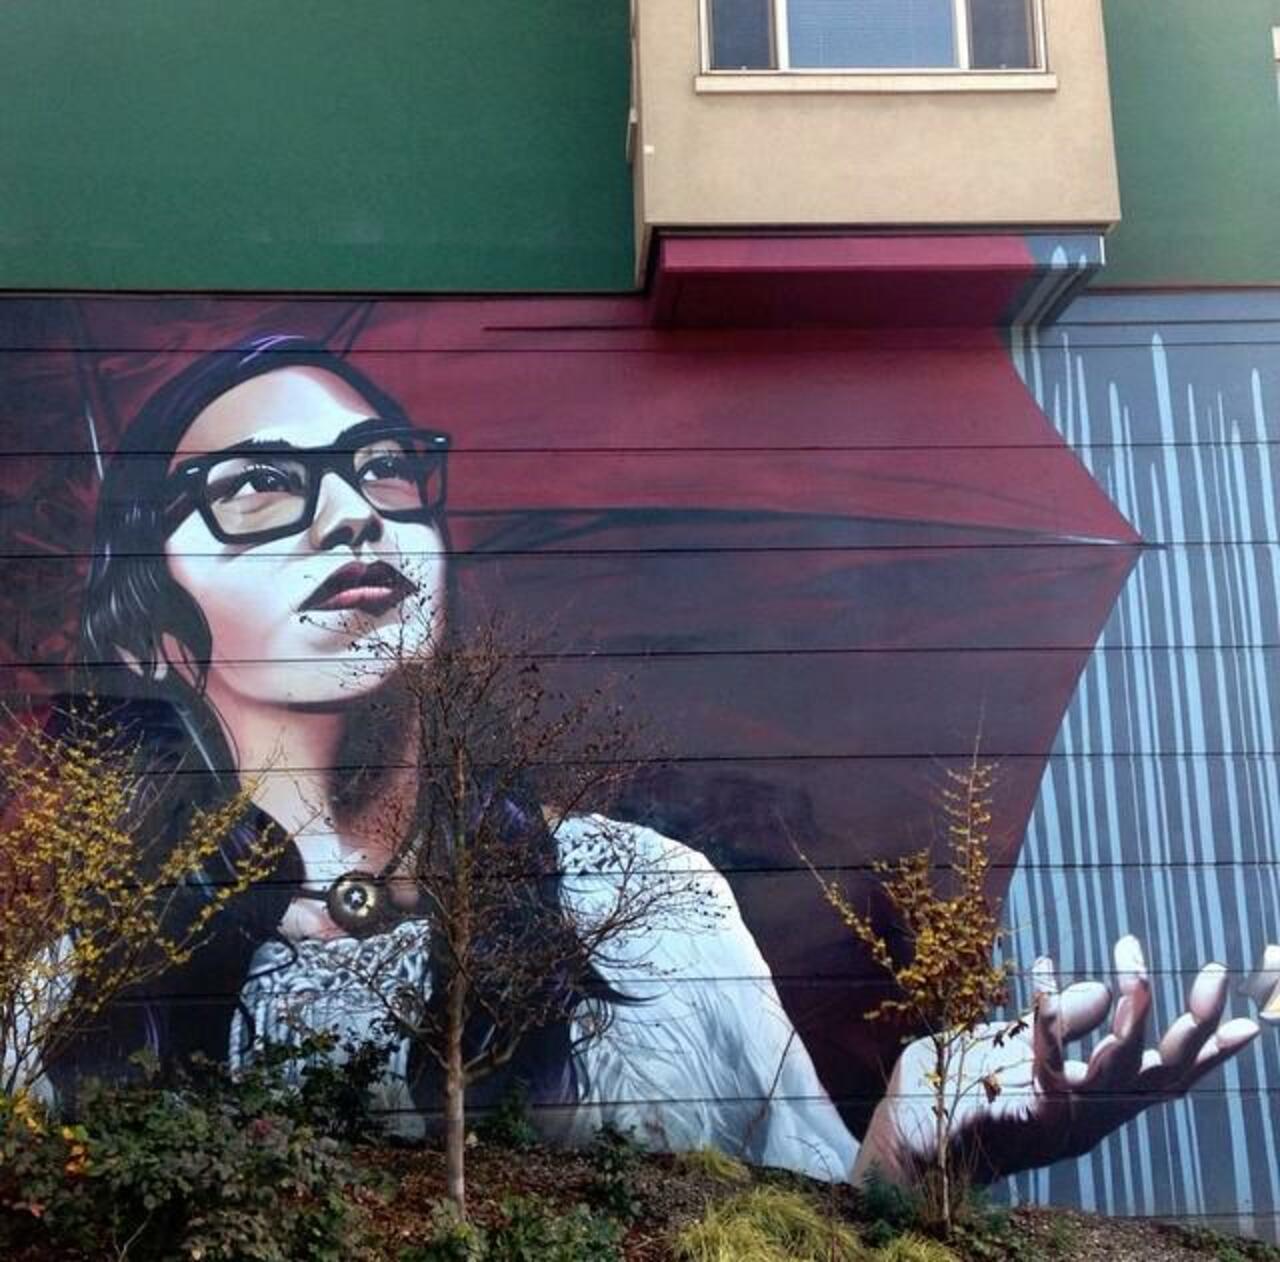 Artist Eras MFK Street Art piece in Capitol Hill, Seattle

#art #mural #graffiti #streetart http://t.co/xyWRO5w6D2